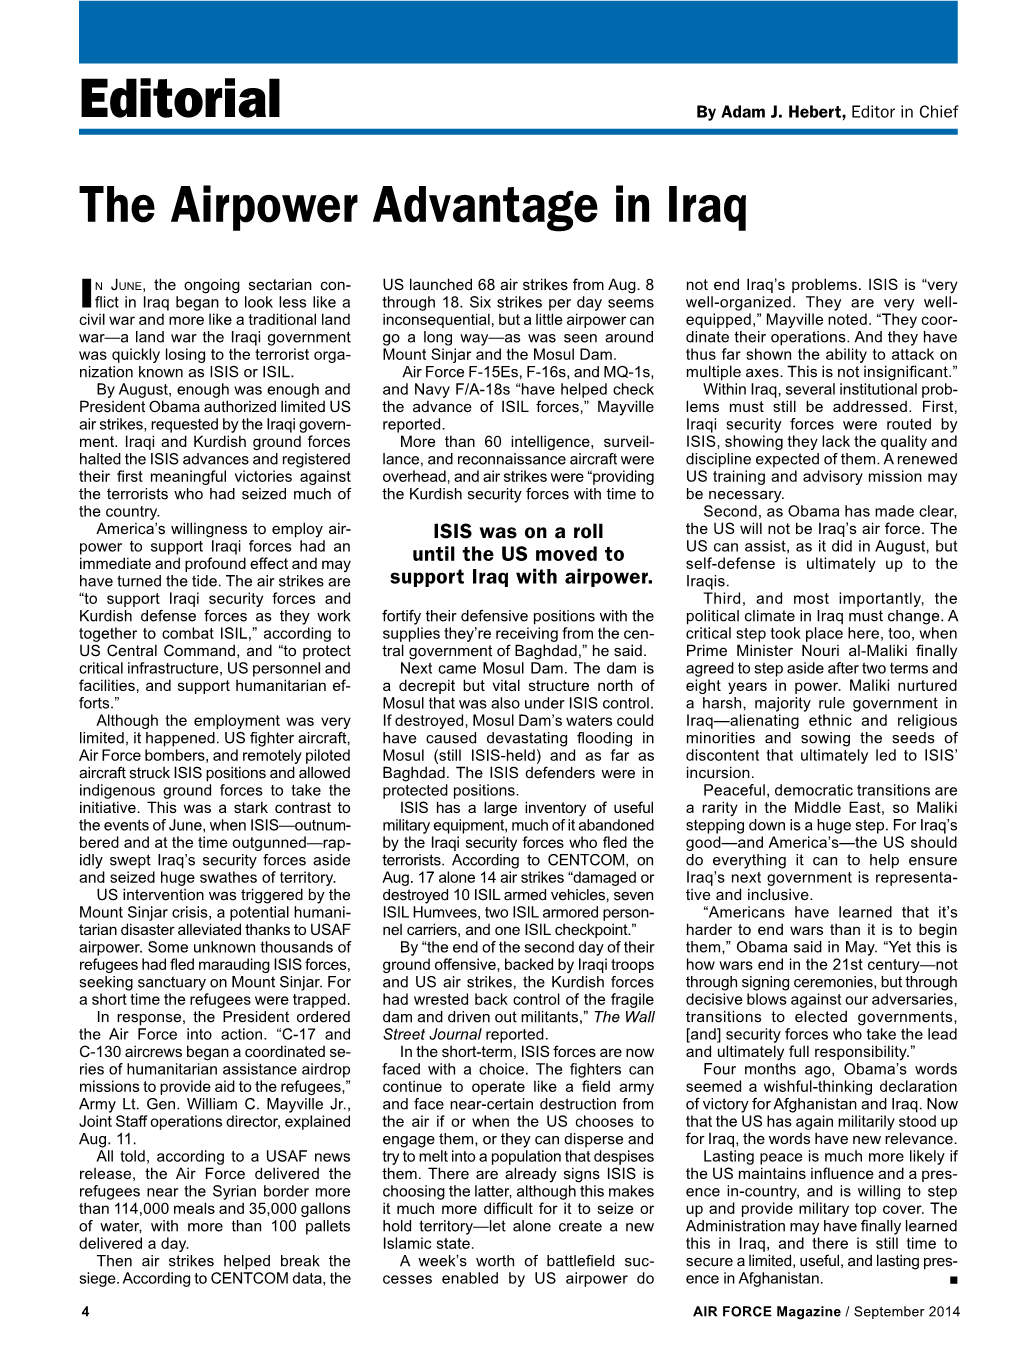 The Airpower Advantage in Iraq